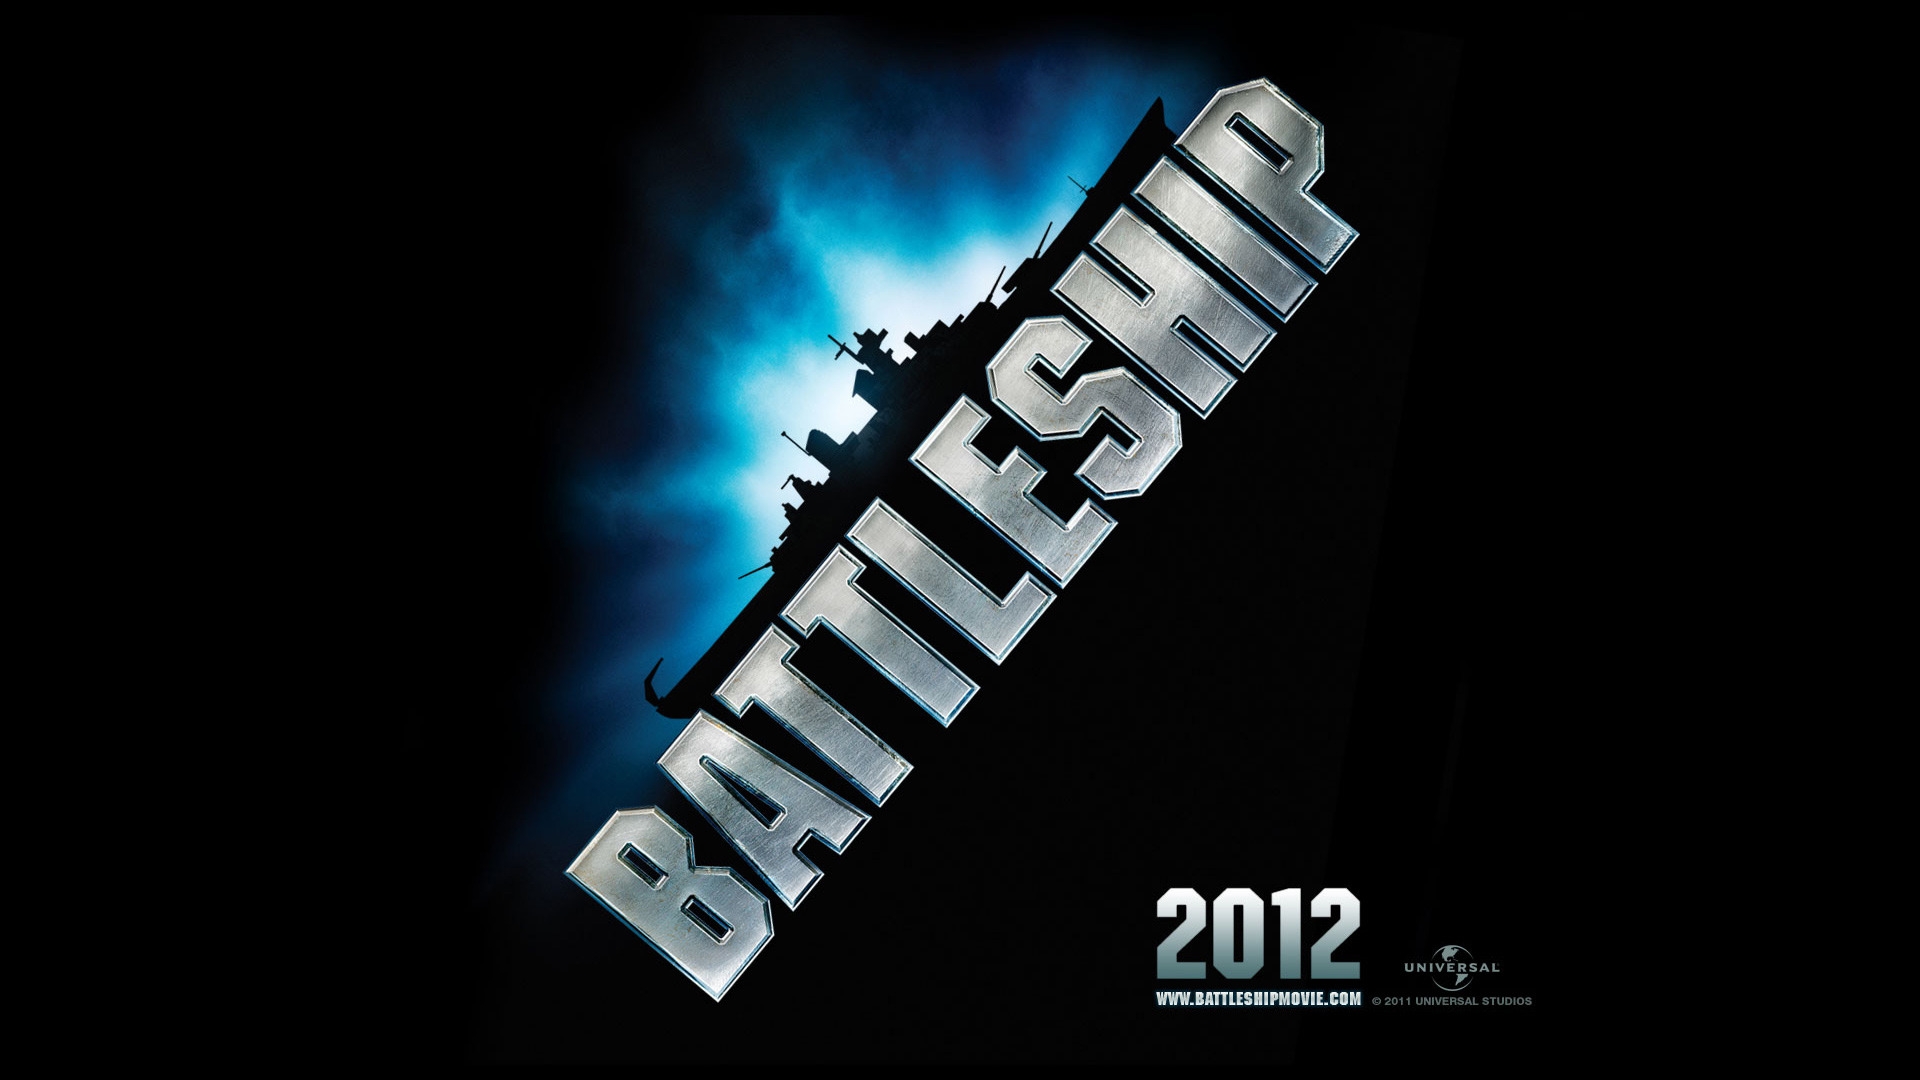 Battleship Movie for 1920 x 1080 HDTV 1080p resolution